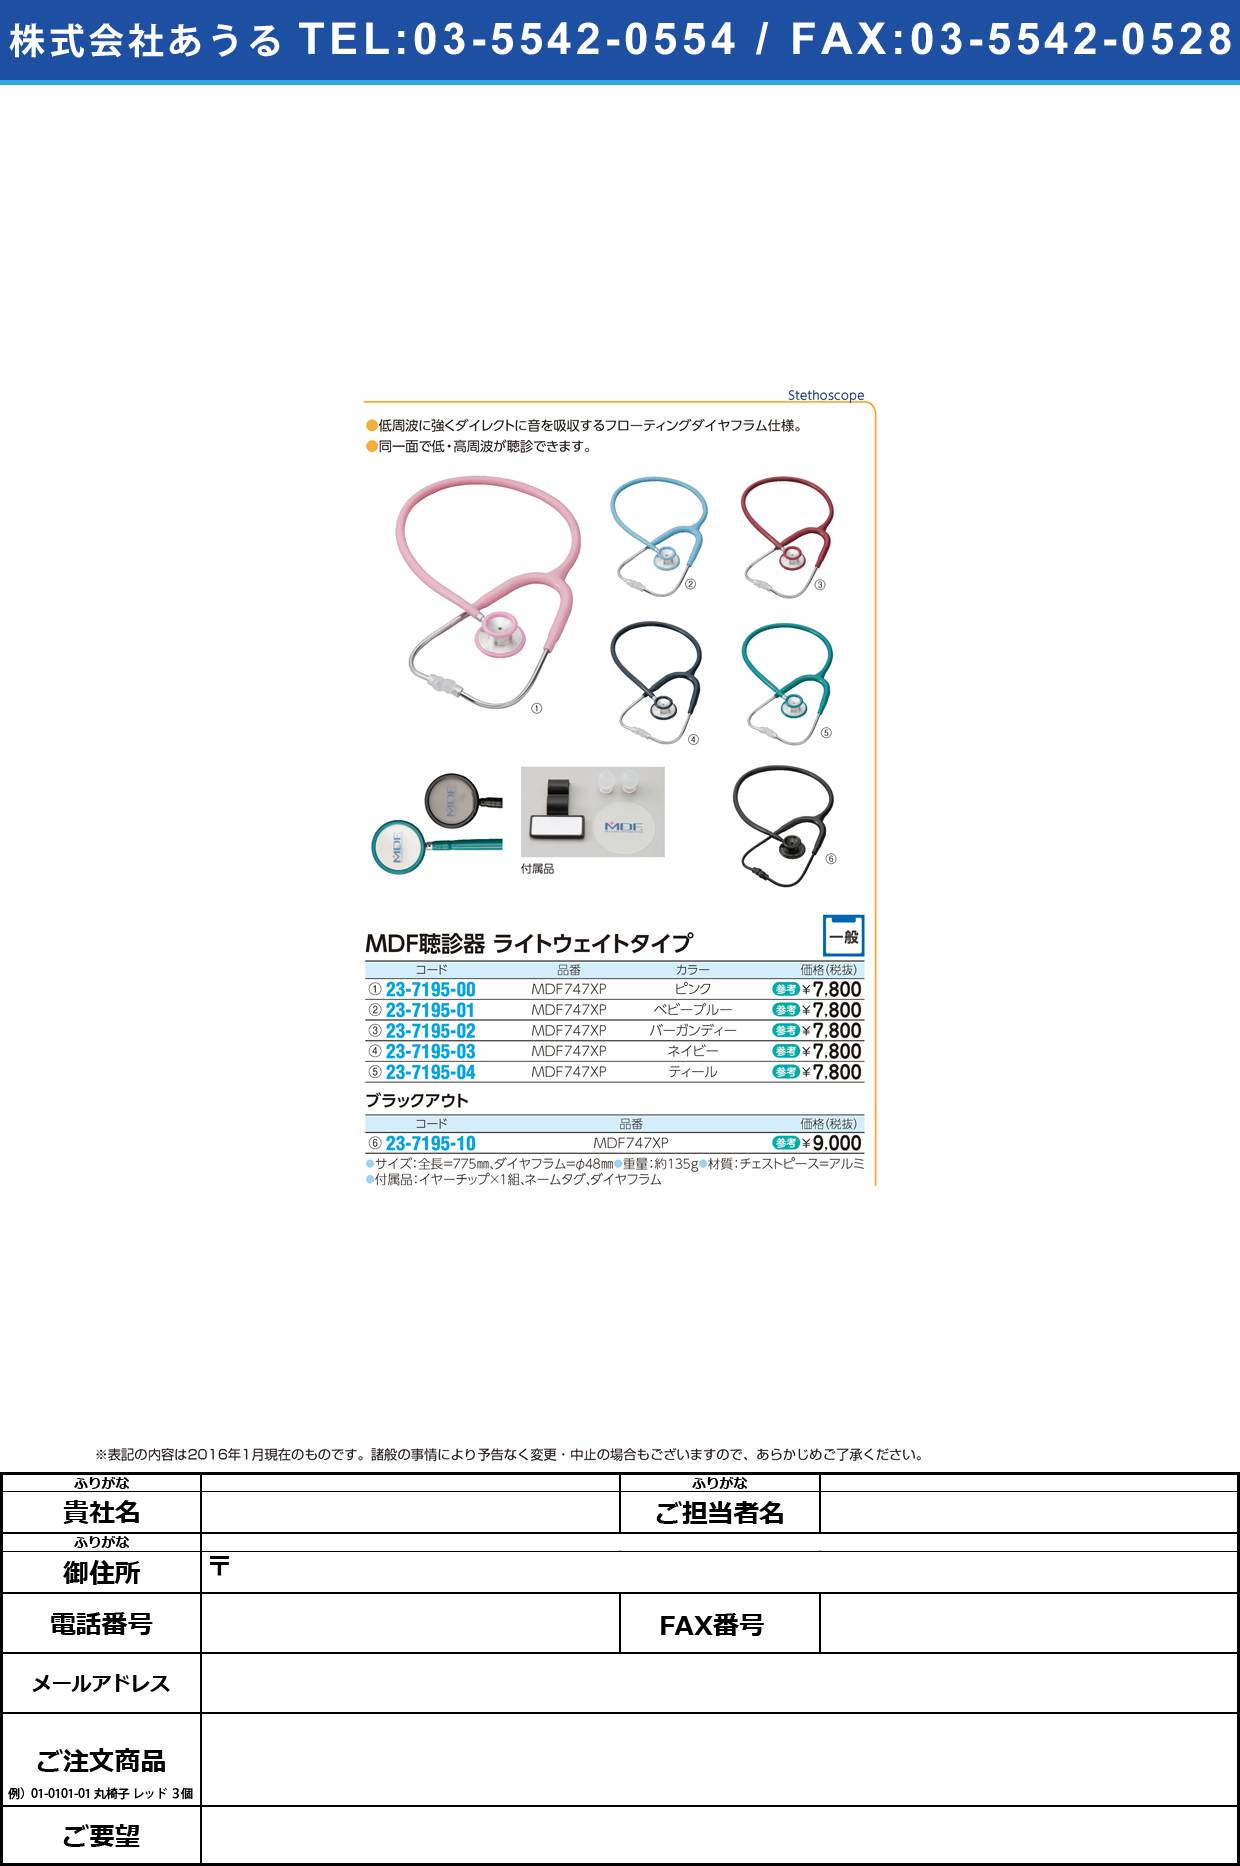 (23-7195-00)ＭＤＦ聴診器ライトウェイトタイプ MDFﾁｮｳｼﾝｷﾗｲﾄｳｪｲﾄﾀｲﾌﾟ MDF747XP(ﾋﾟﾝｸ)【1組単位】【2016年カタログ商品】